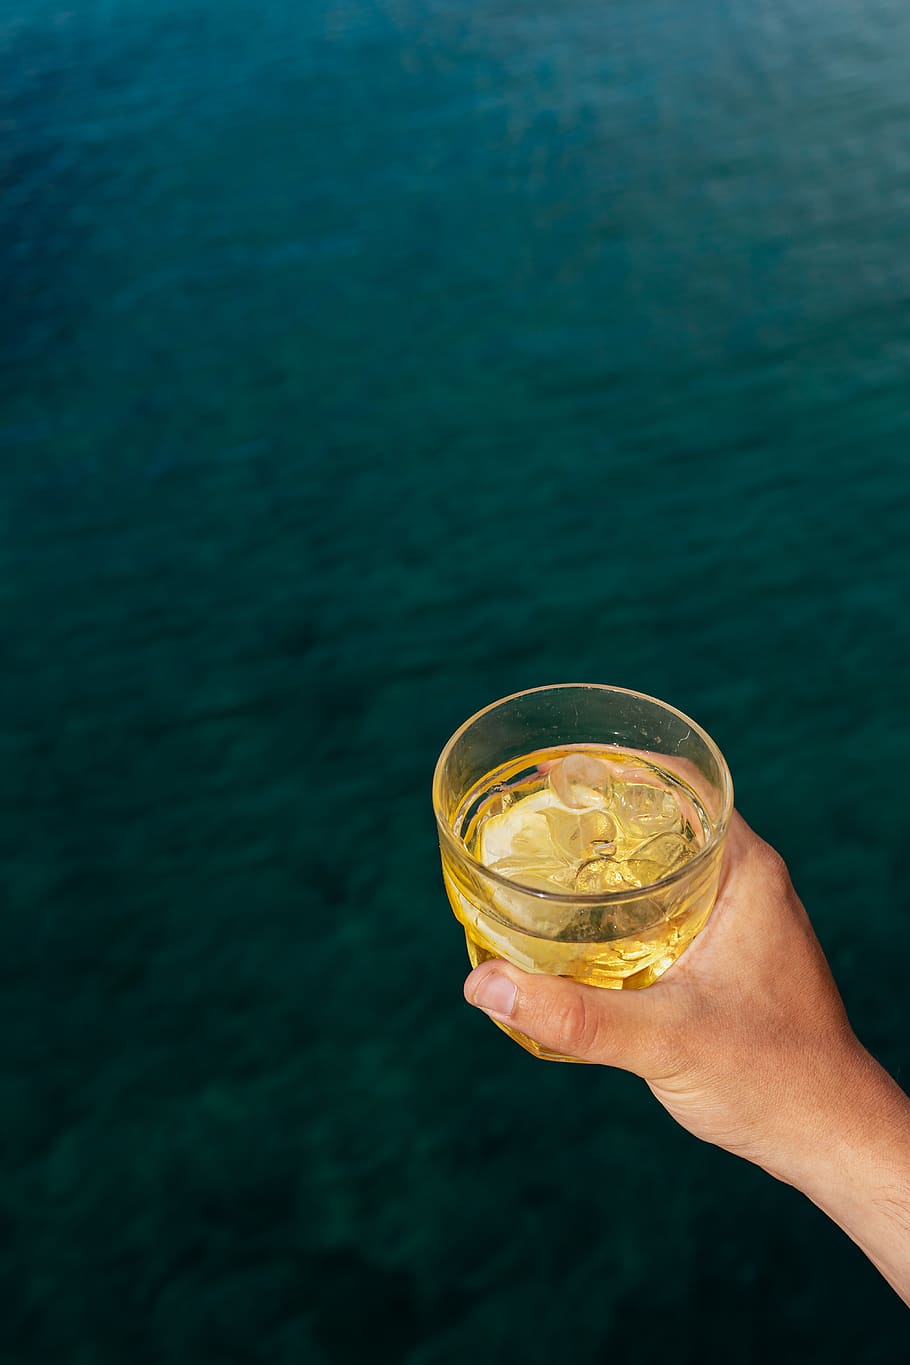 alcohol, Italy, drink, italian, sorrento, vacations, sea, mediterranean, Summer, drinks